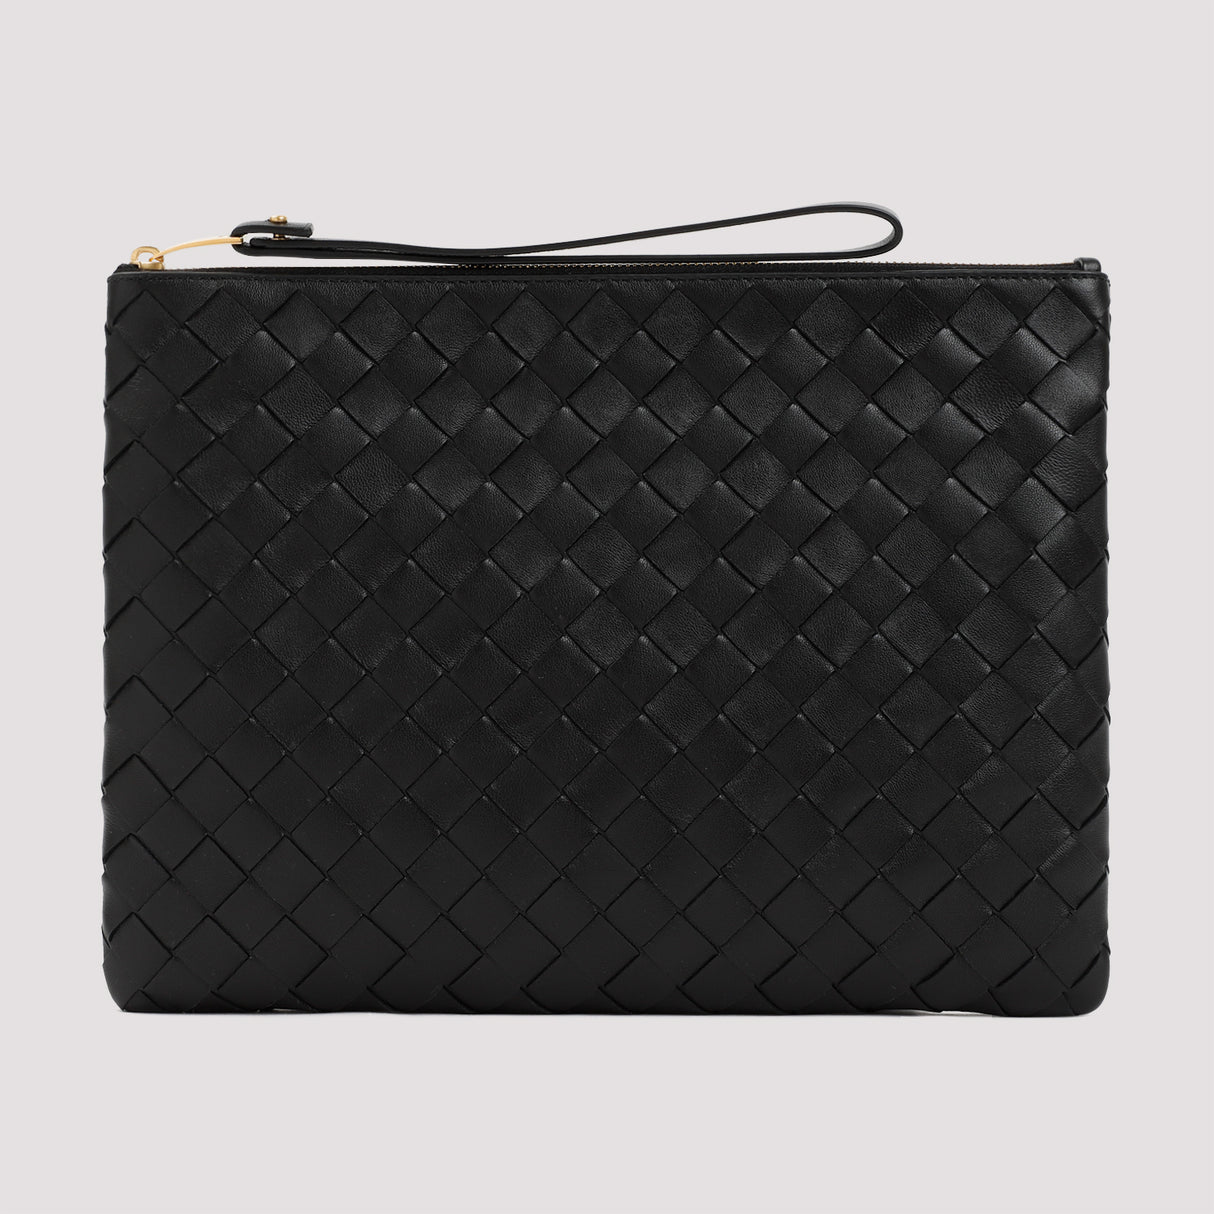 Black Lamb Leather Medium Flat Pouch Handbag for Women